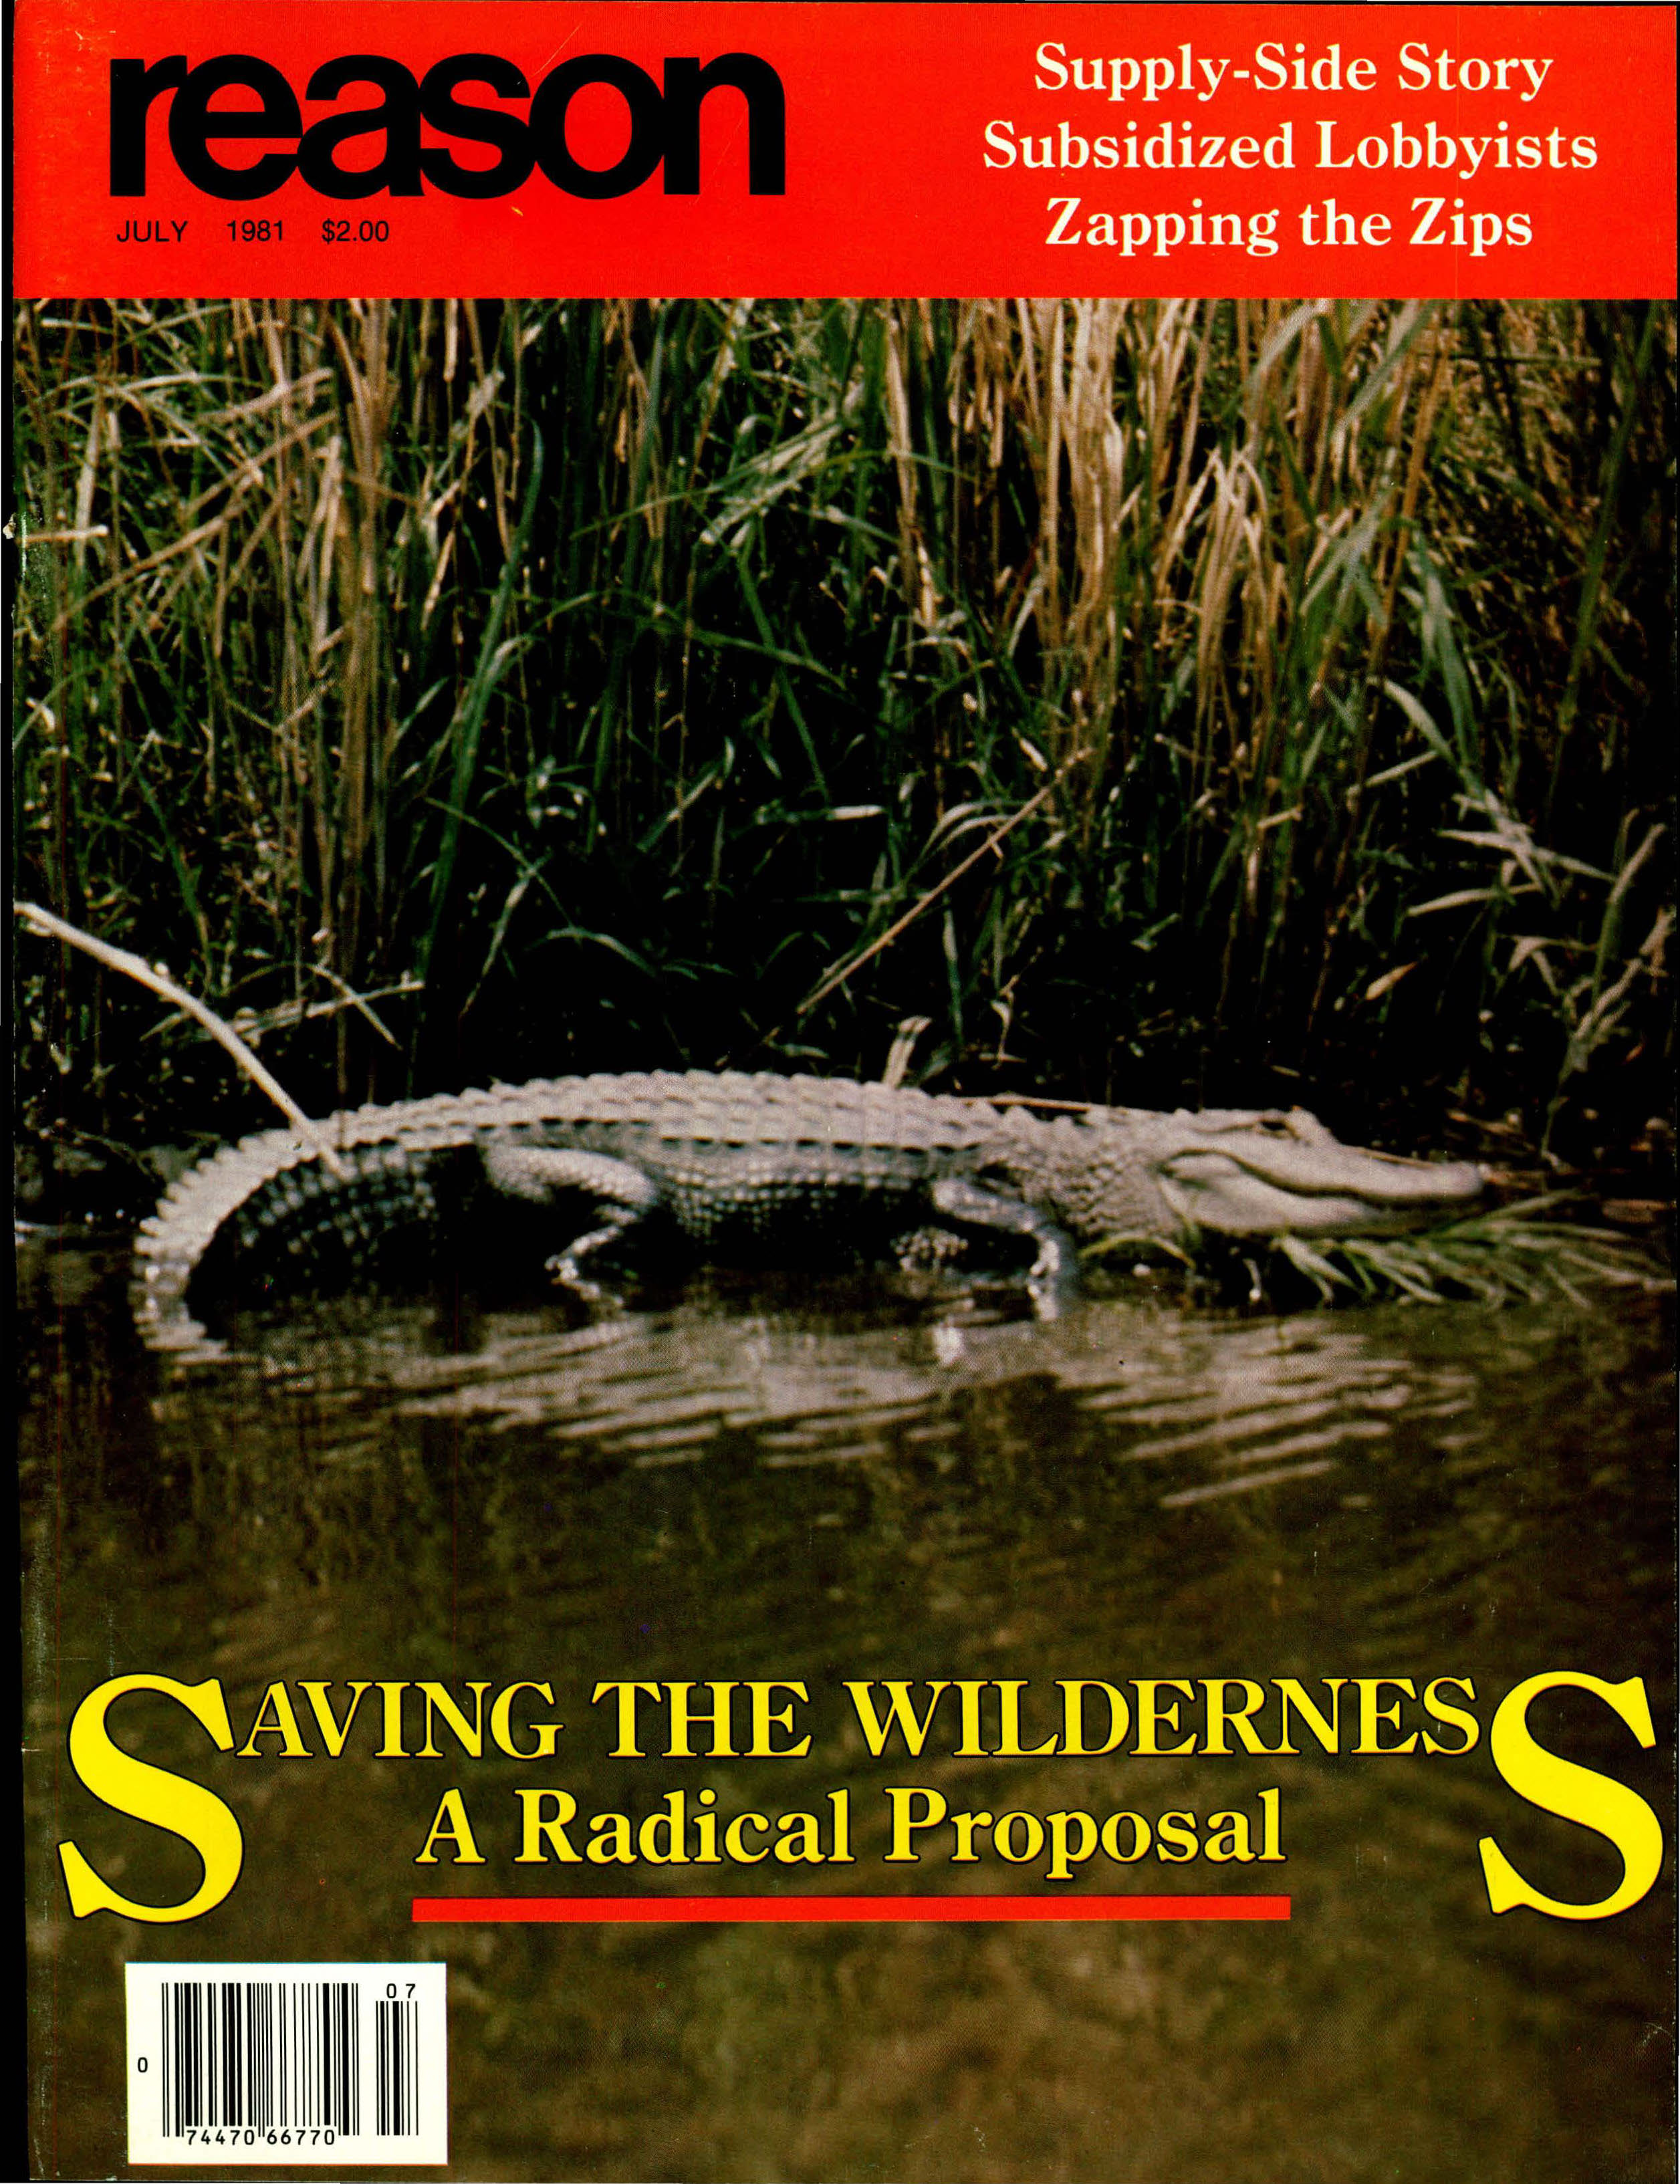 Reason magazine, July 1981 cover image